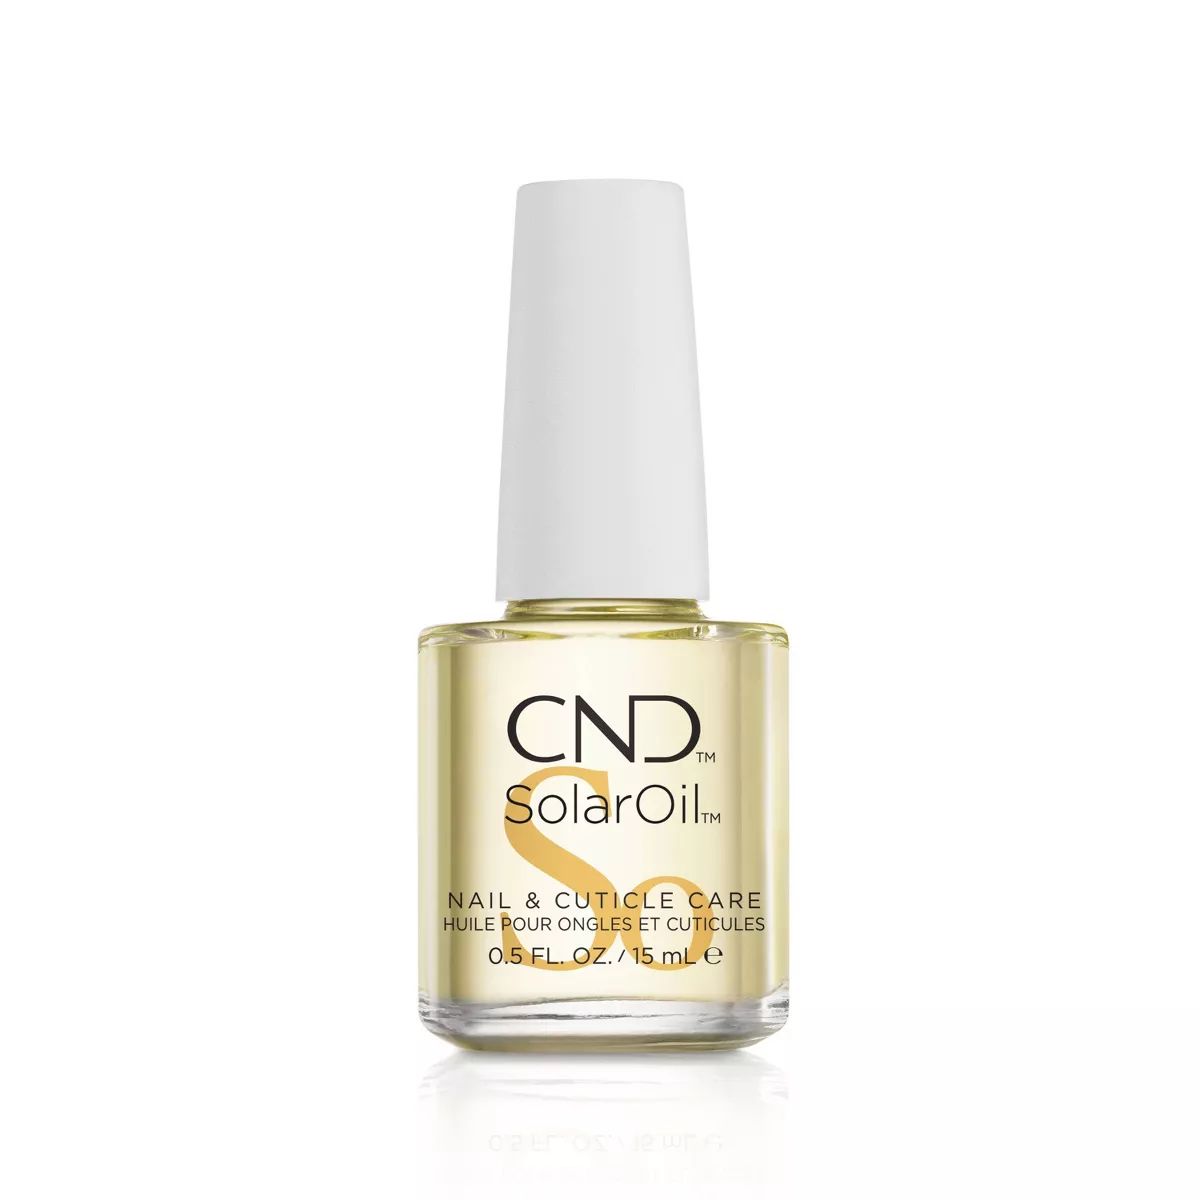 CND Solar Oil Nail & Cuticle Treatment - 0.5 fl oz | Target